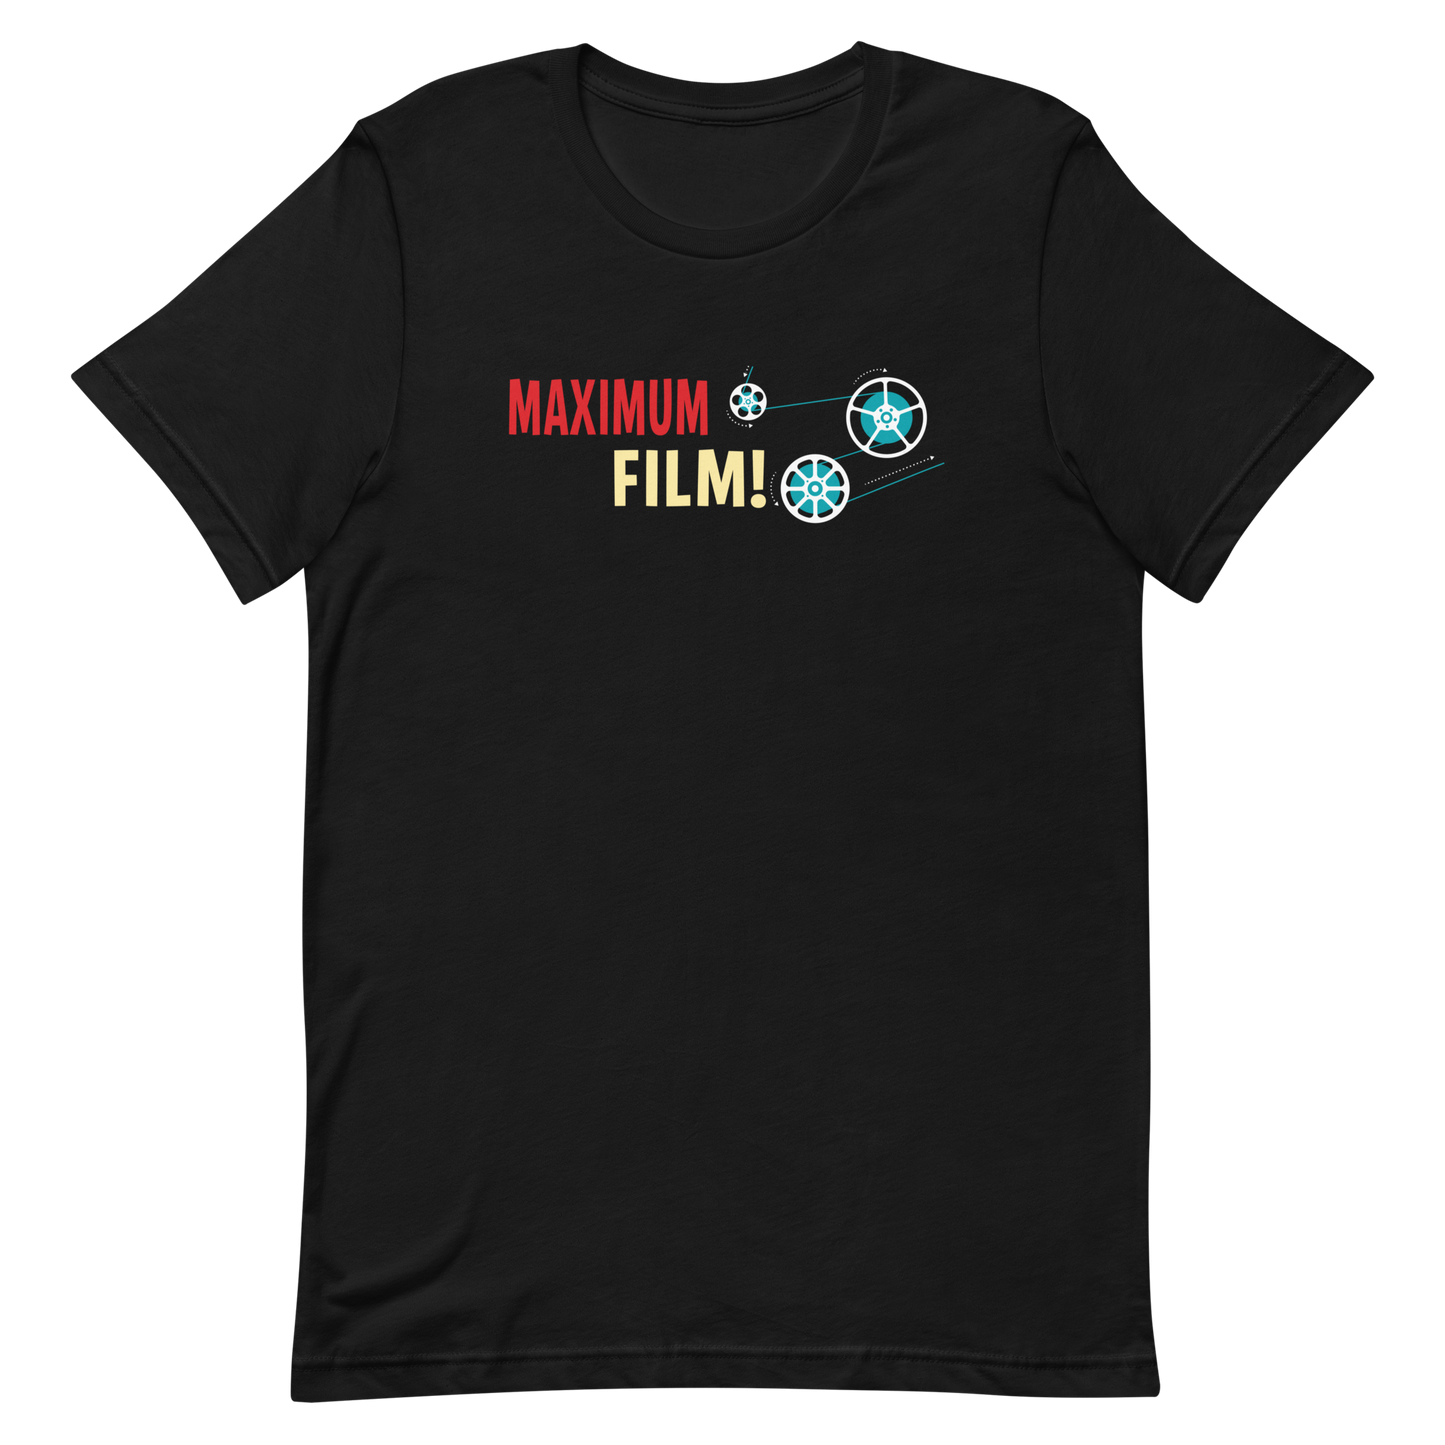 Maximum Film! logo T-shirt